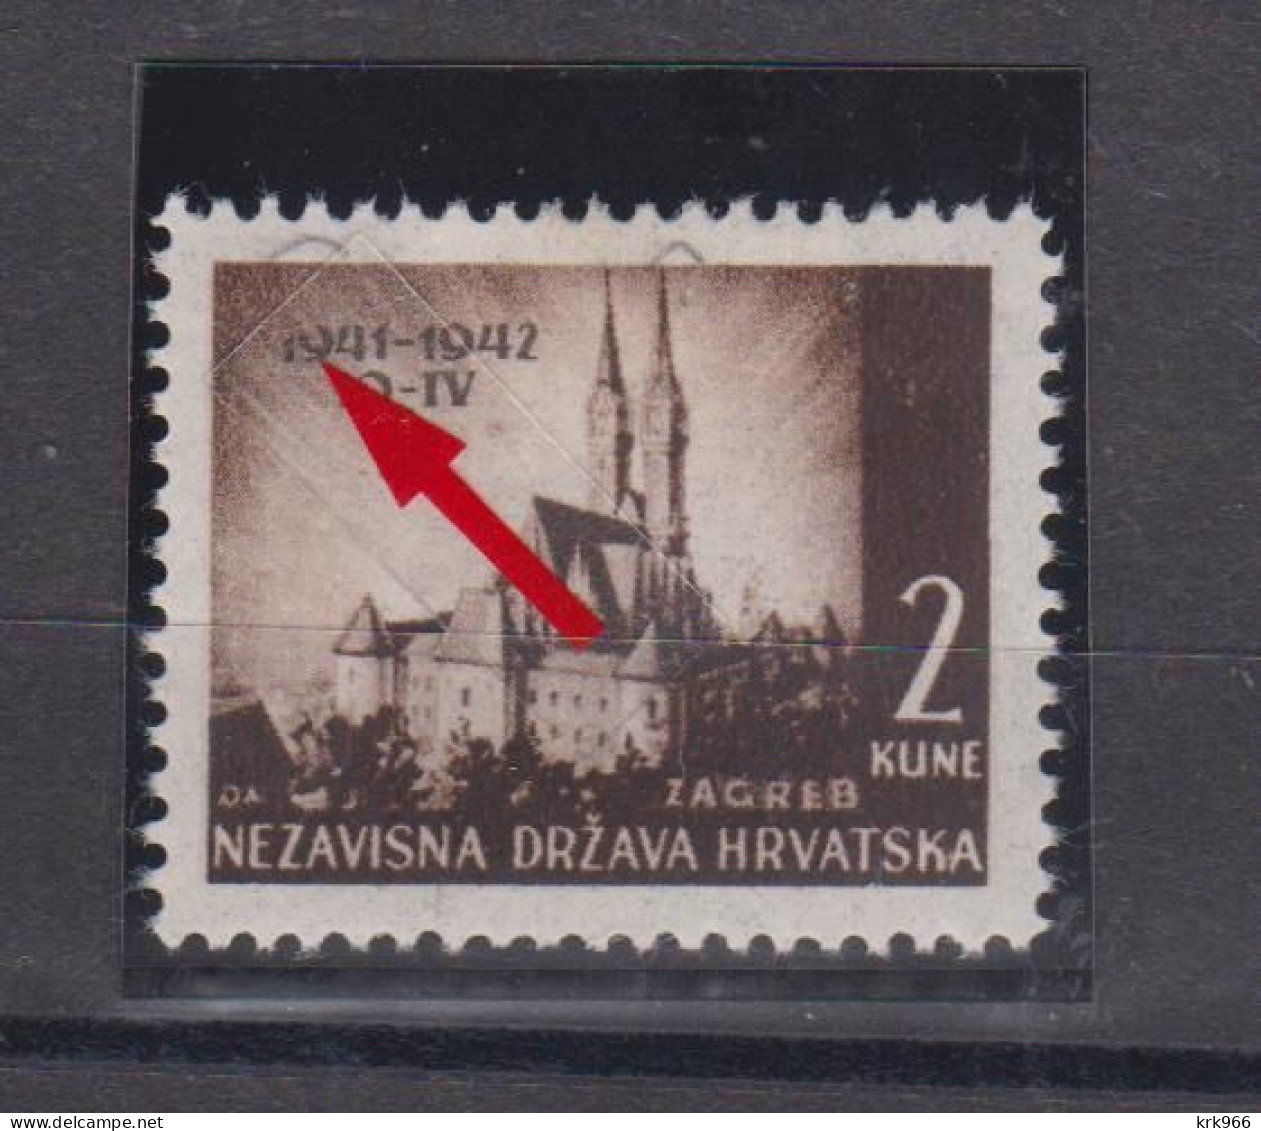 CROATIA WW II, I Aniv 1942 2 Kn Plate Error Hinged - Croatie